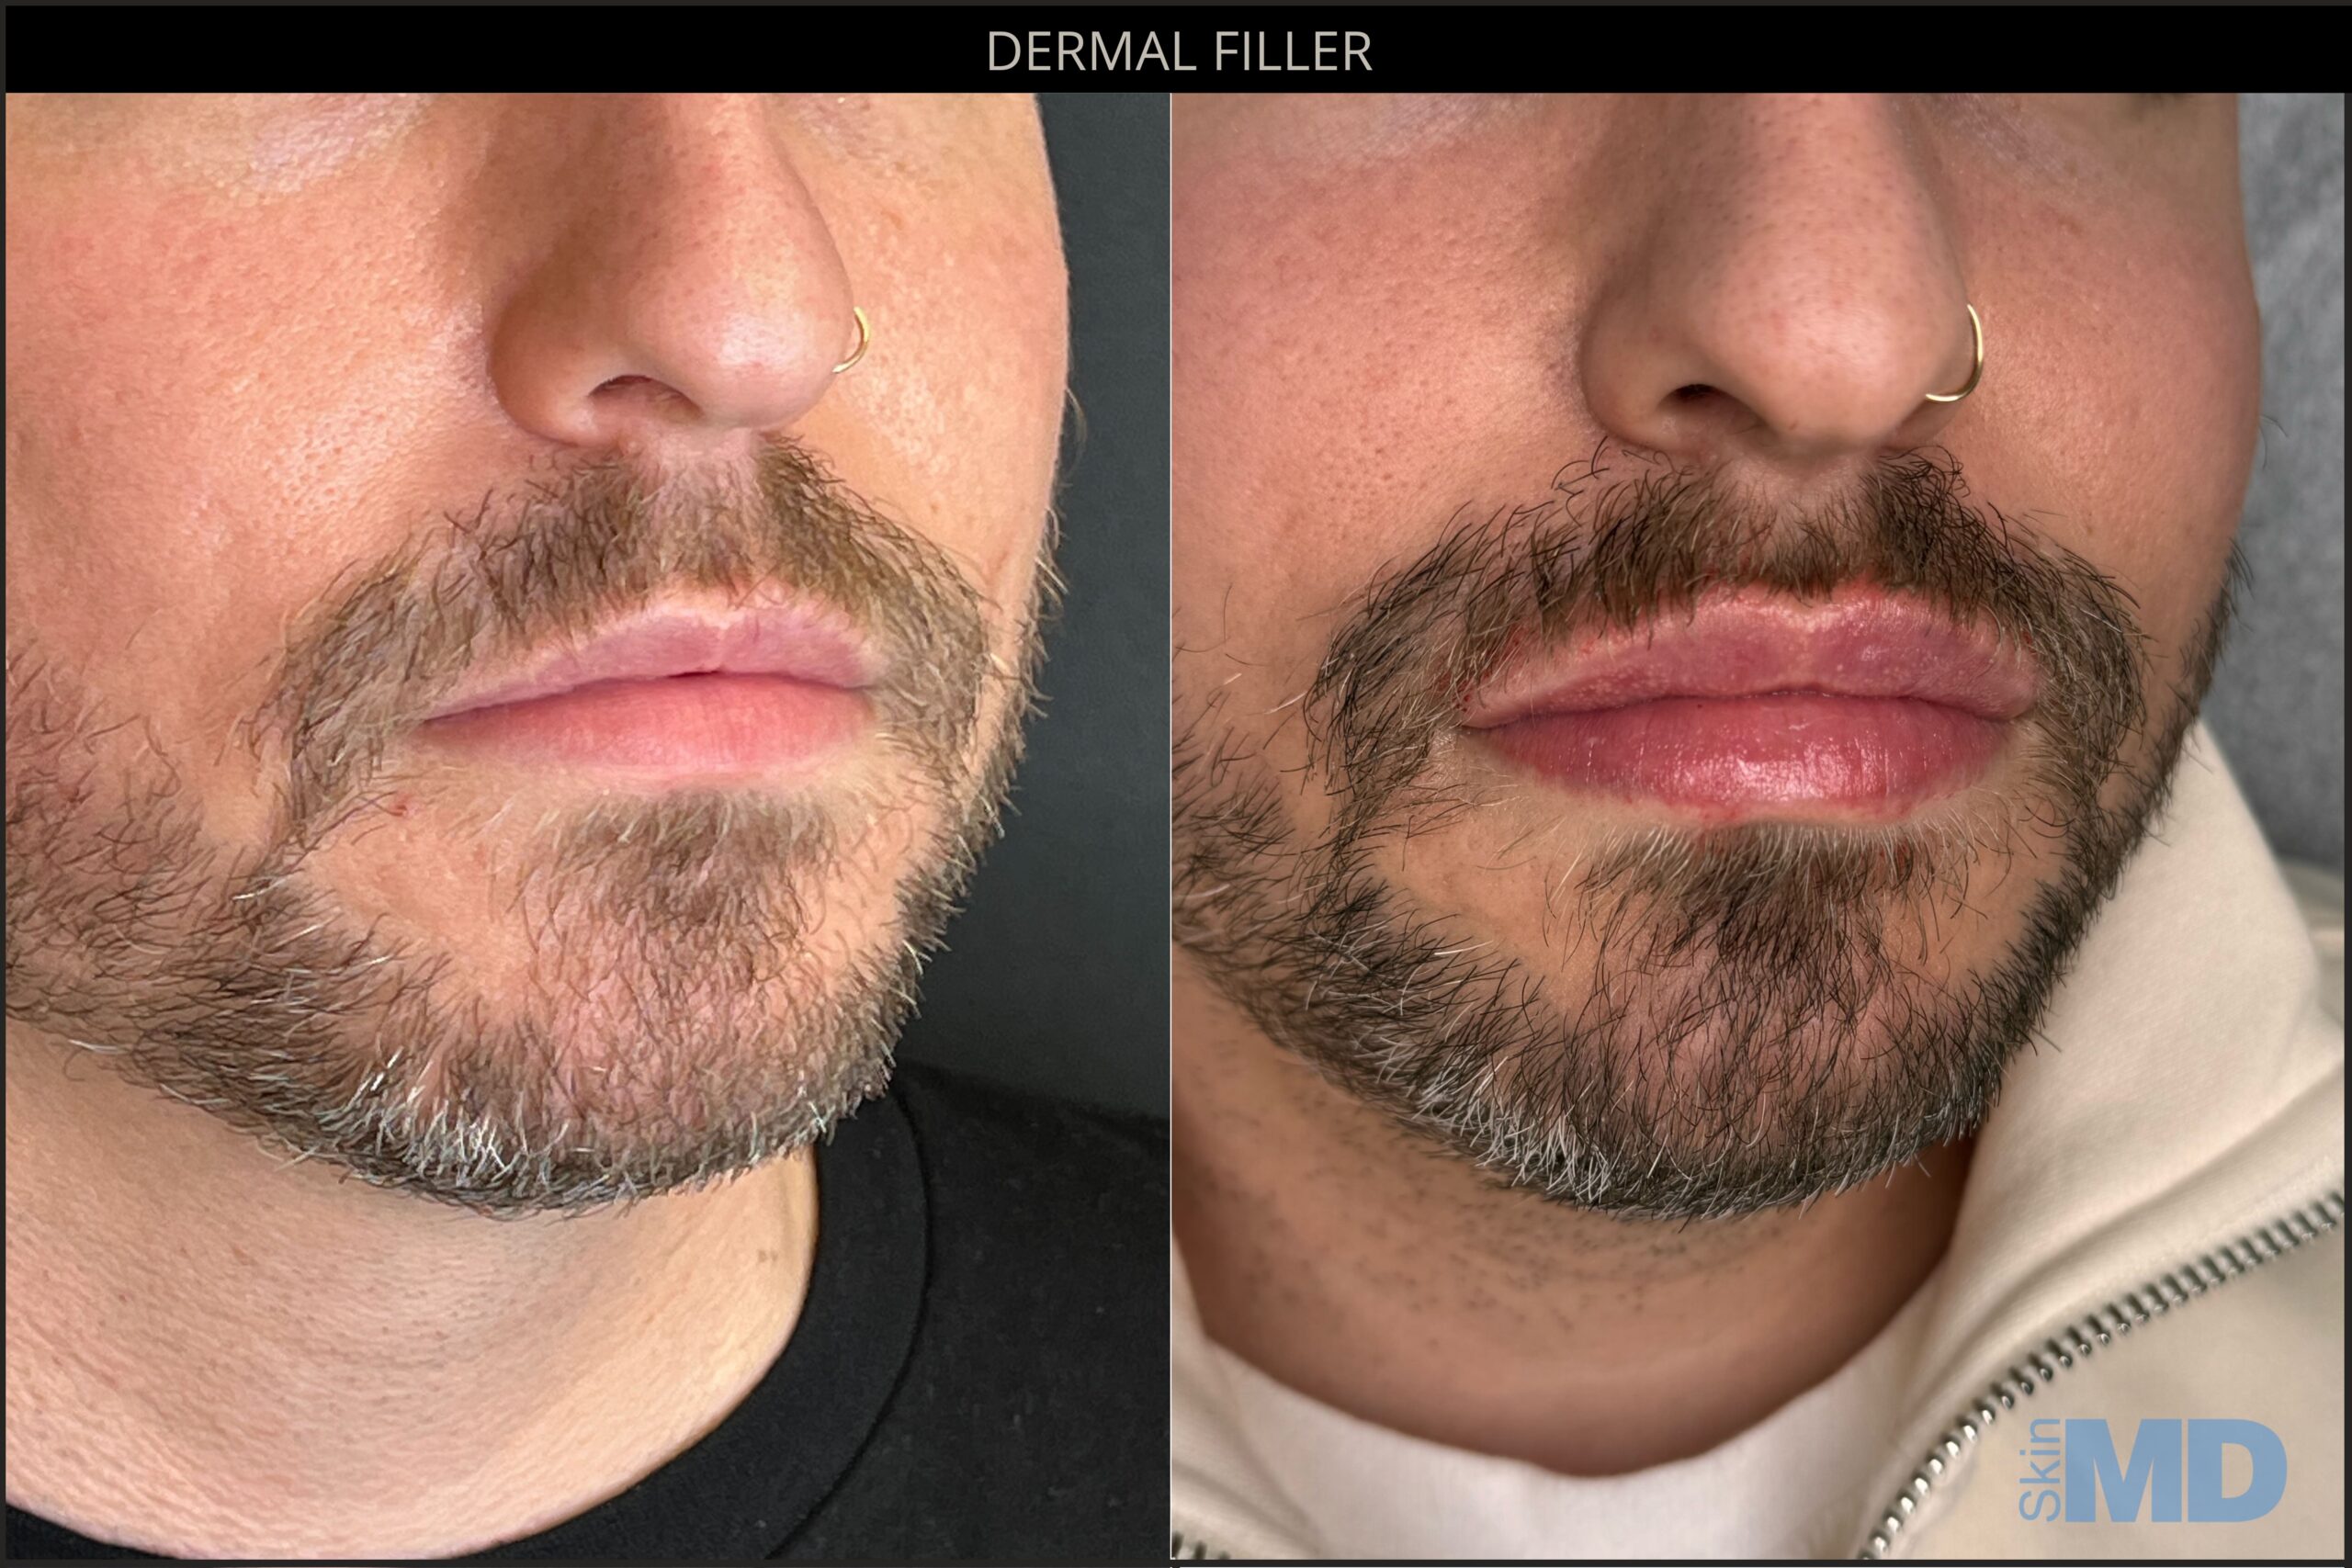 Before and after dermal filler results